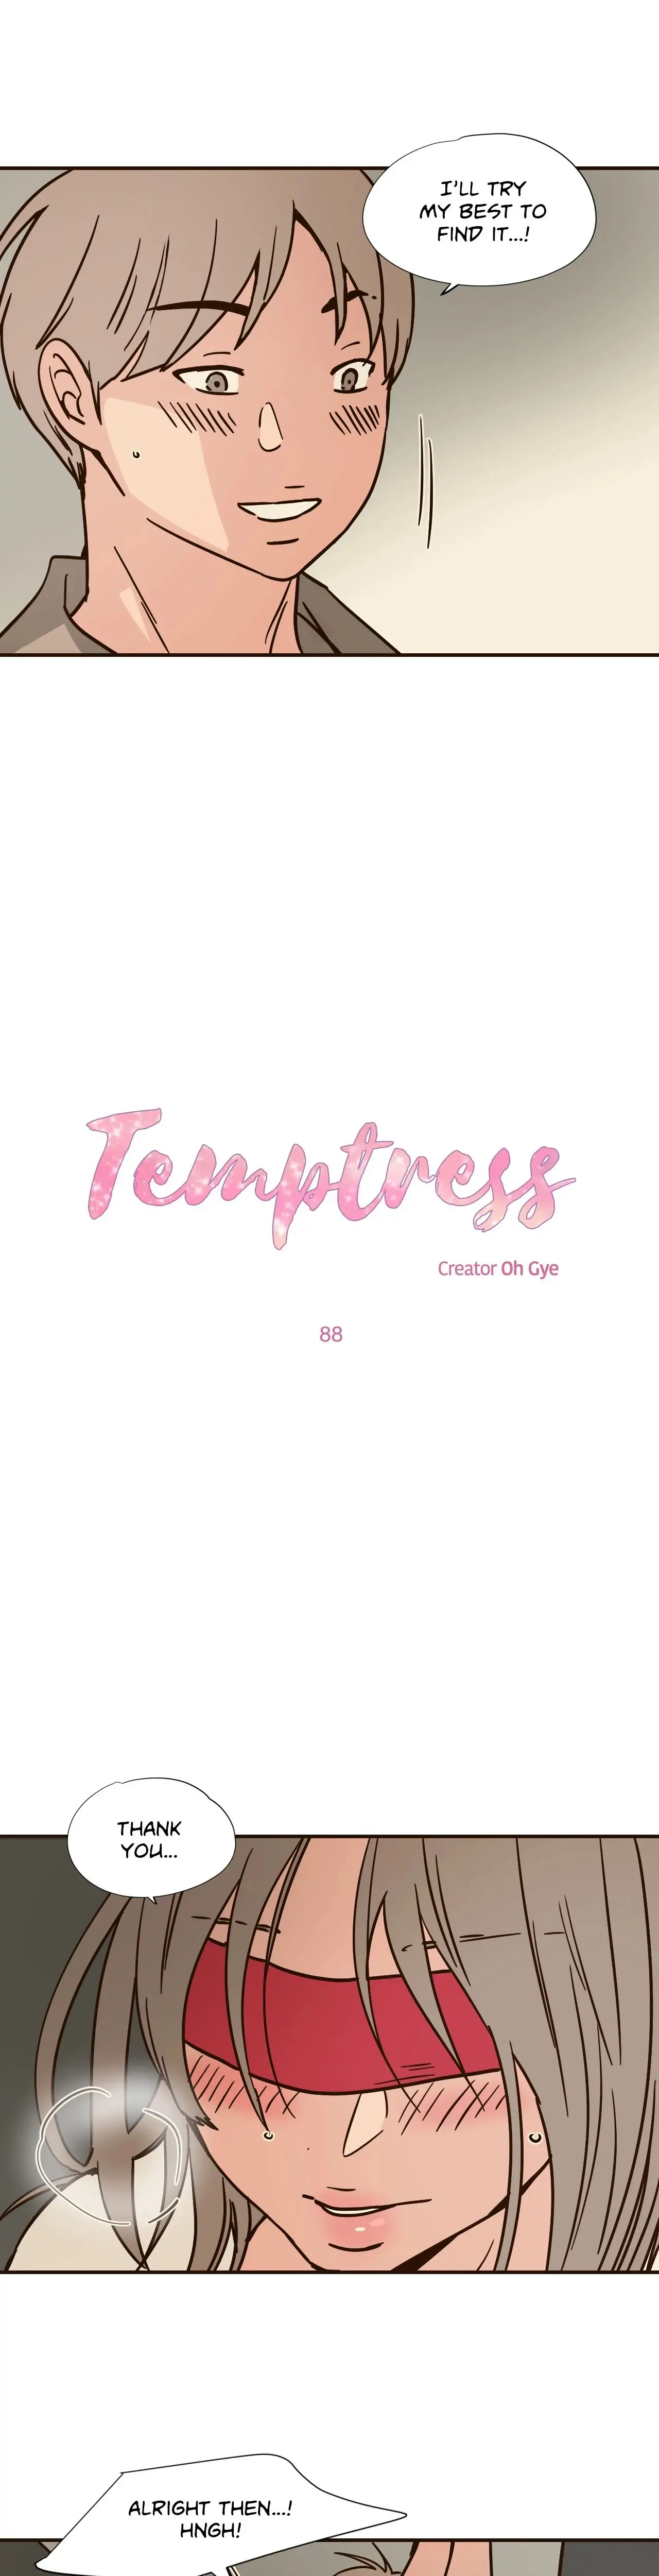 TEMPTRESS - chapter 88 - #1